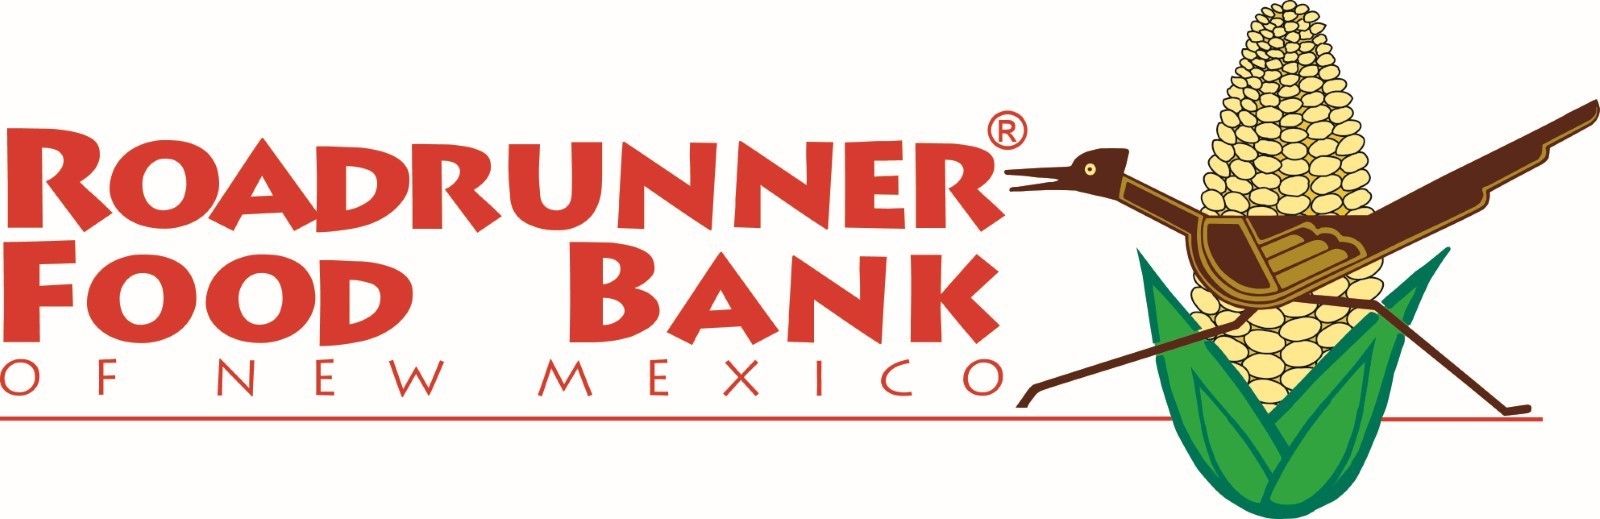 Logo della banca alimentare Roadrunner